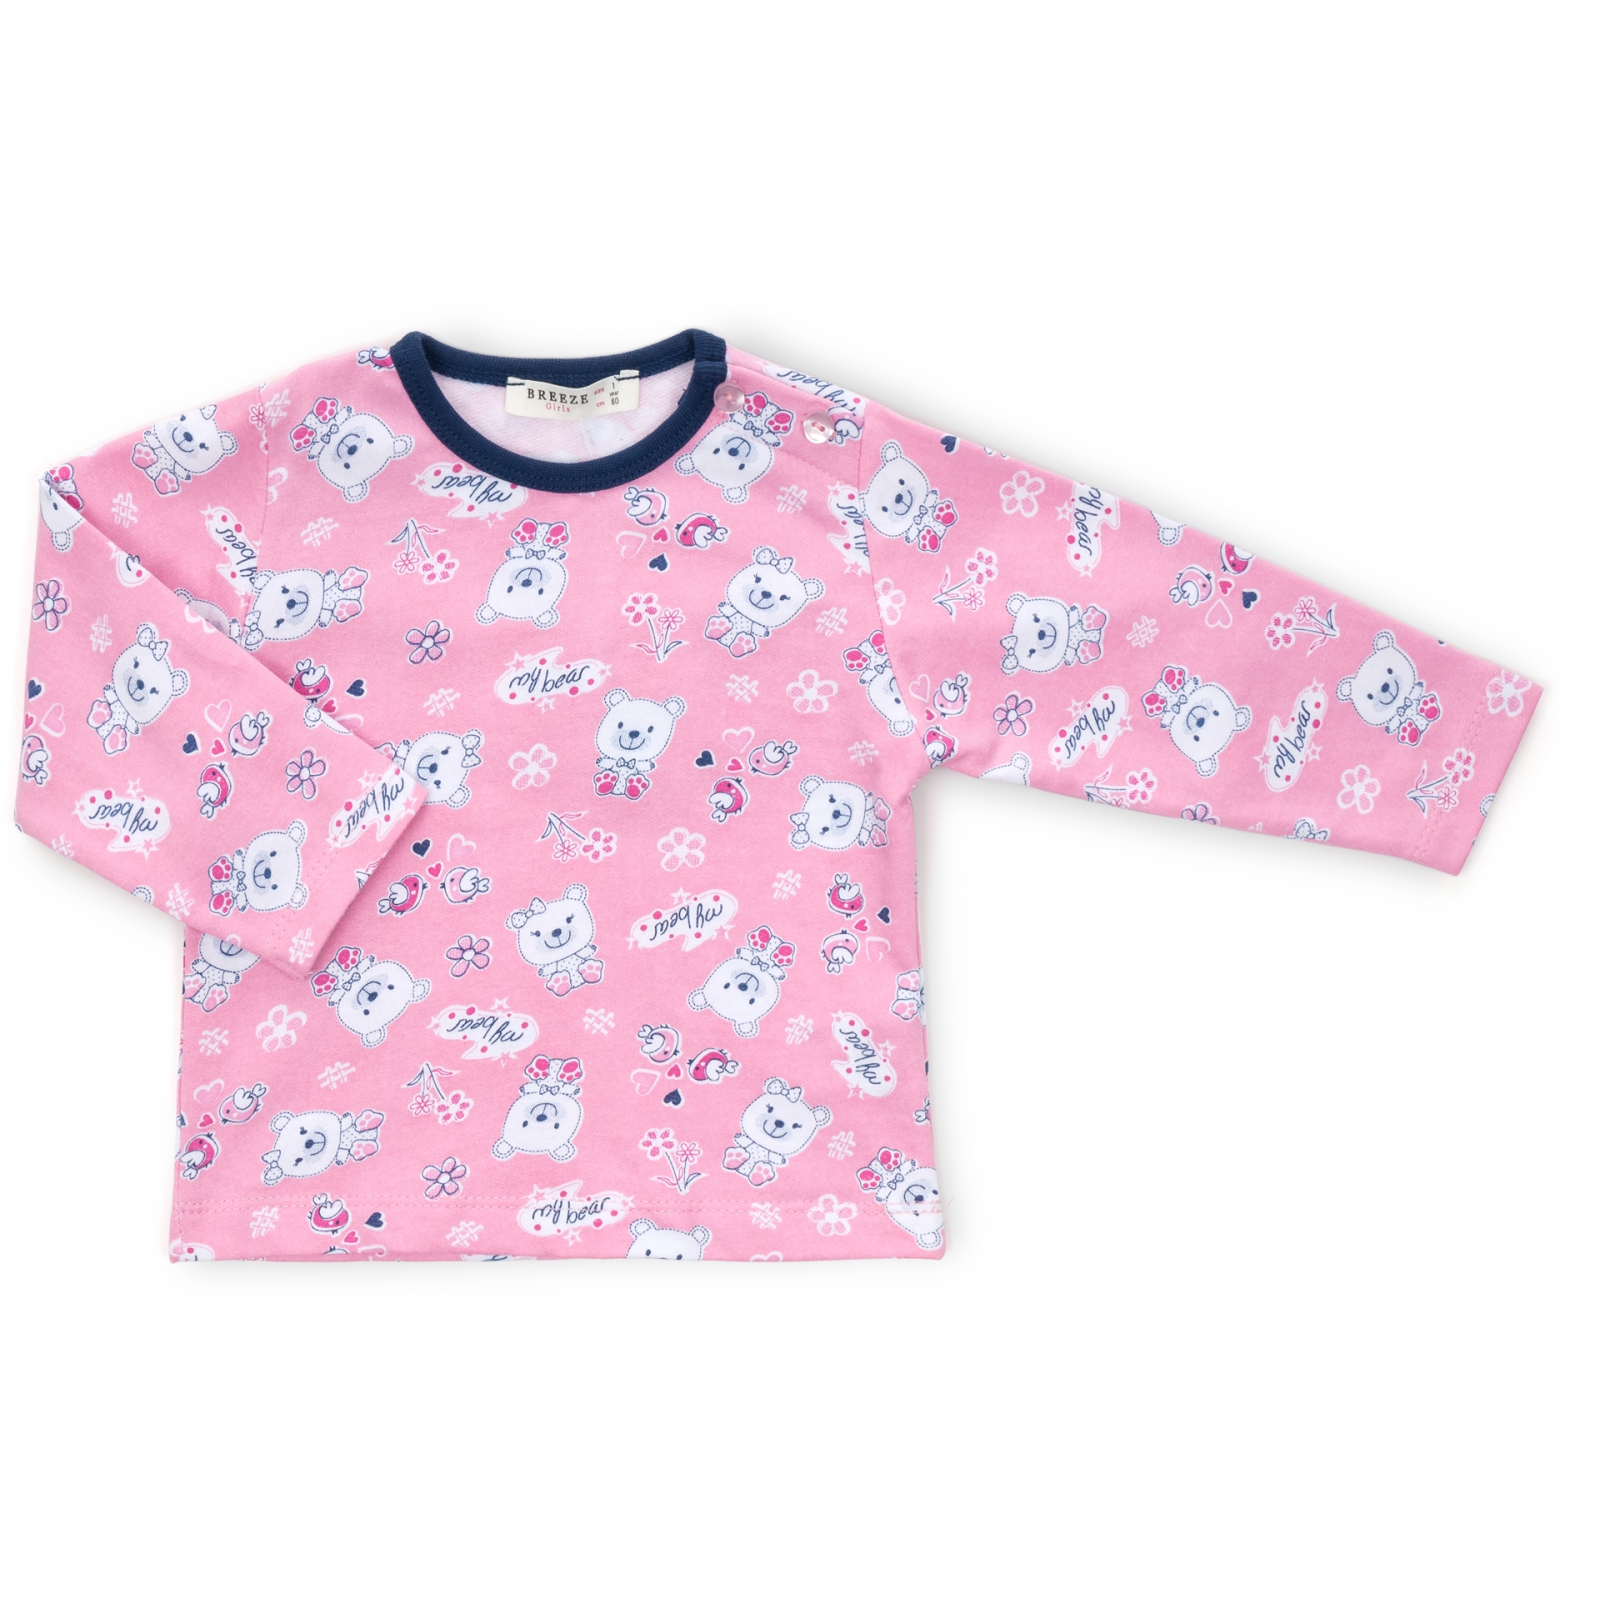 Пижама Breeze с мишками (8382-80G-pink) изображение 2